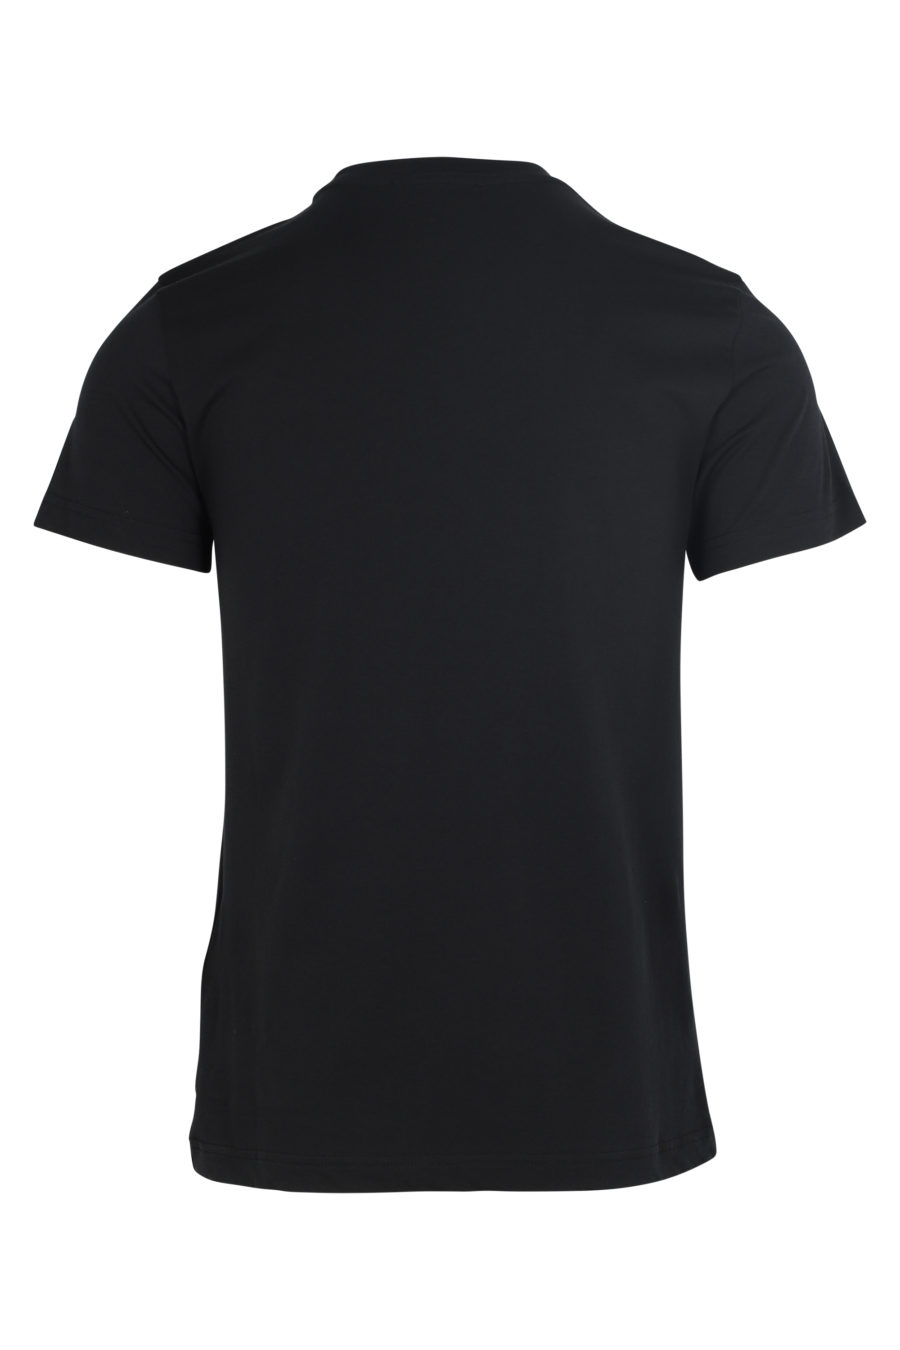 Camiseta negra con logo redondo metalizado - IMG 6058